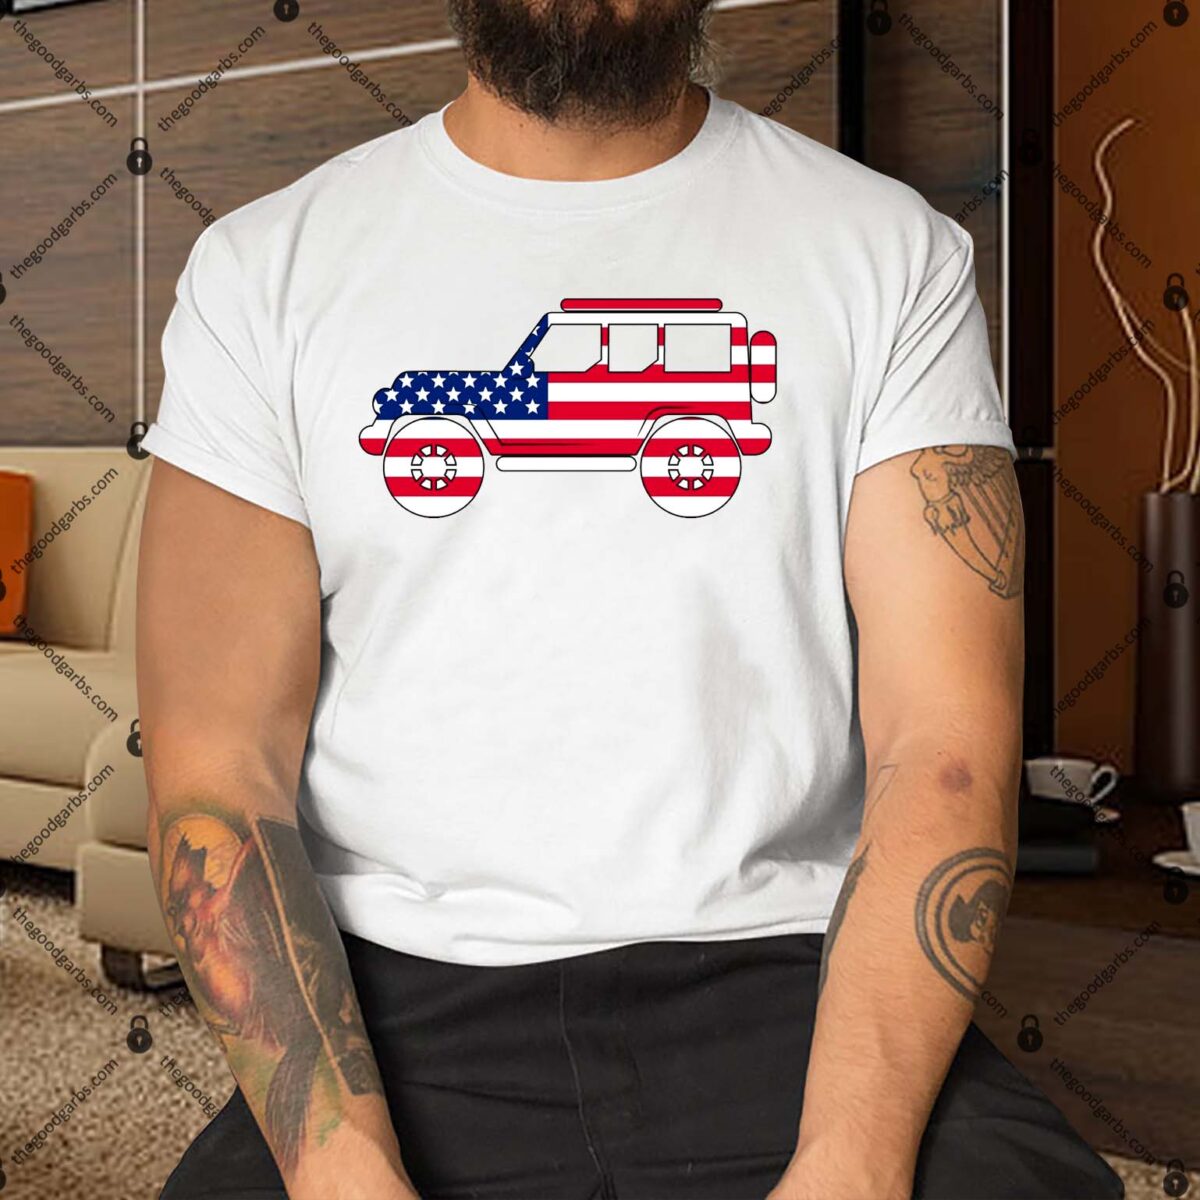 USA Truck American Flag Shirt